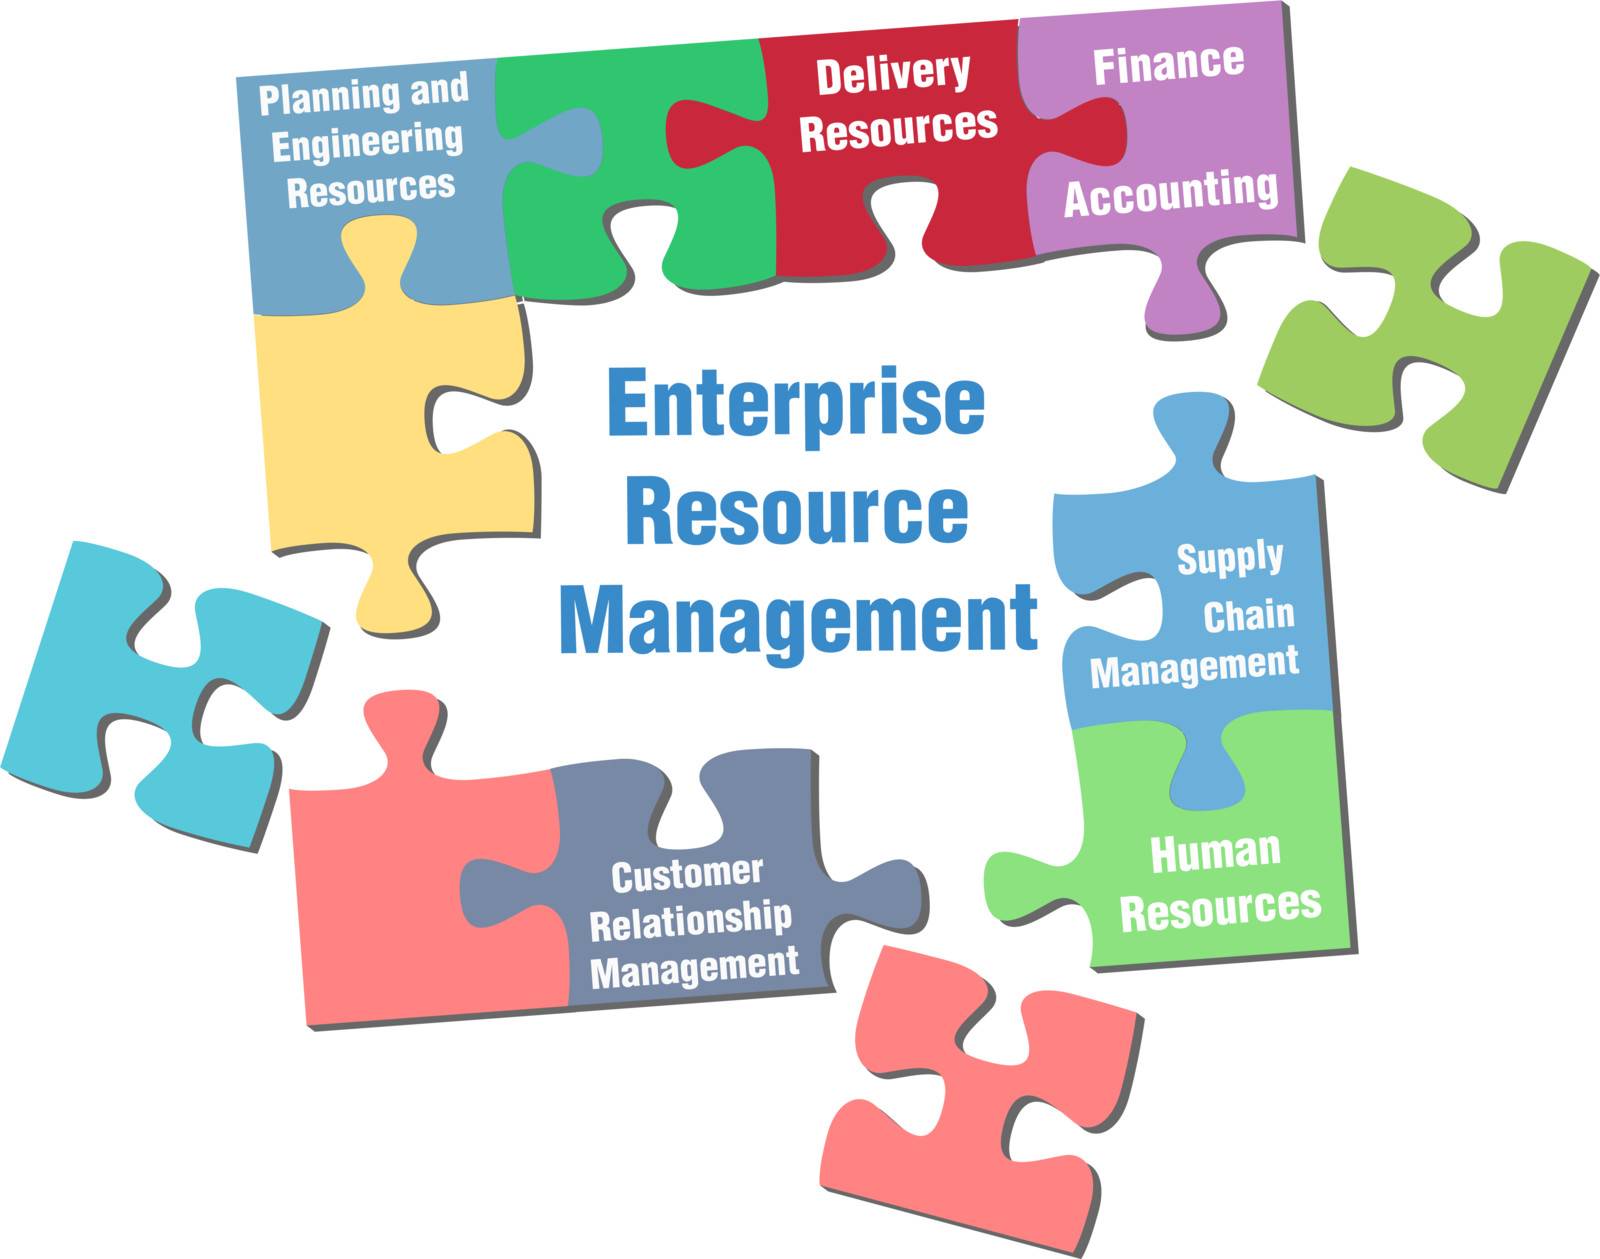 Solution to Enterprise Resource Management jigsaw puzzle pieces